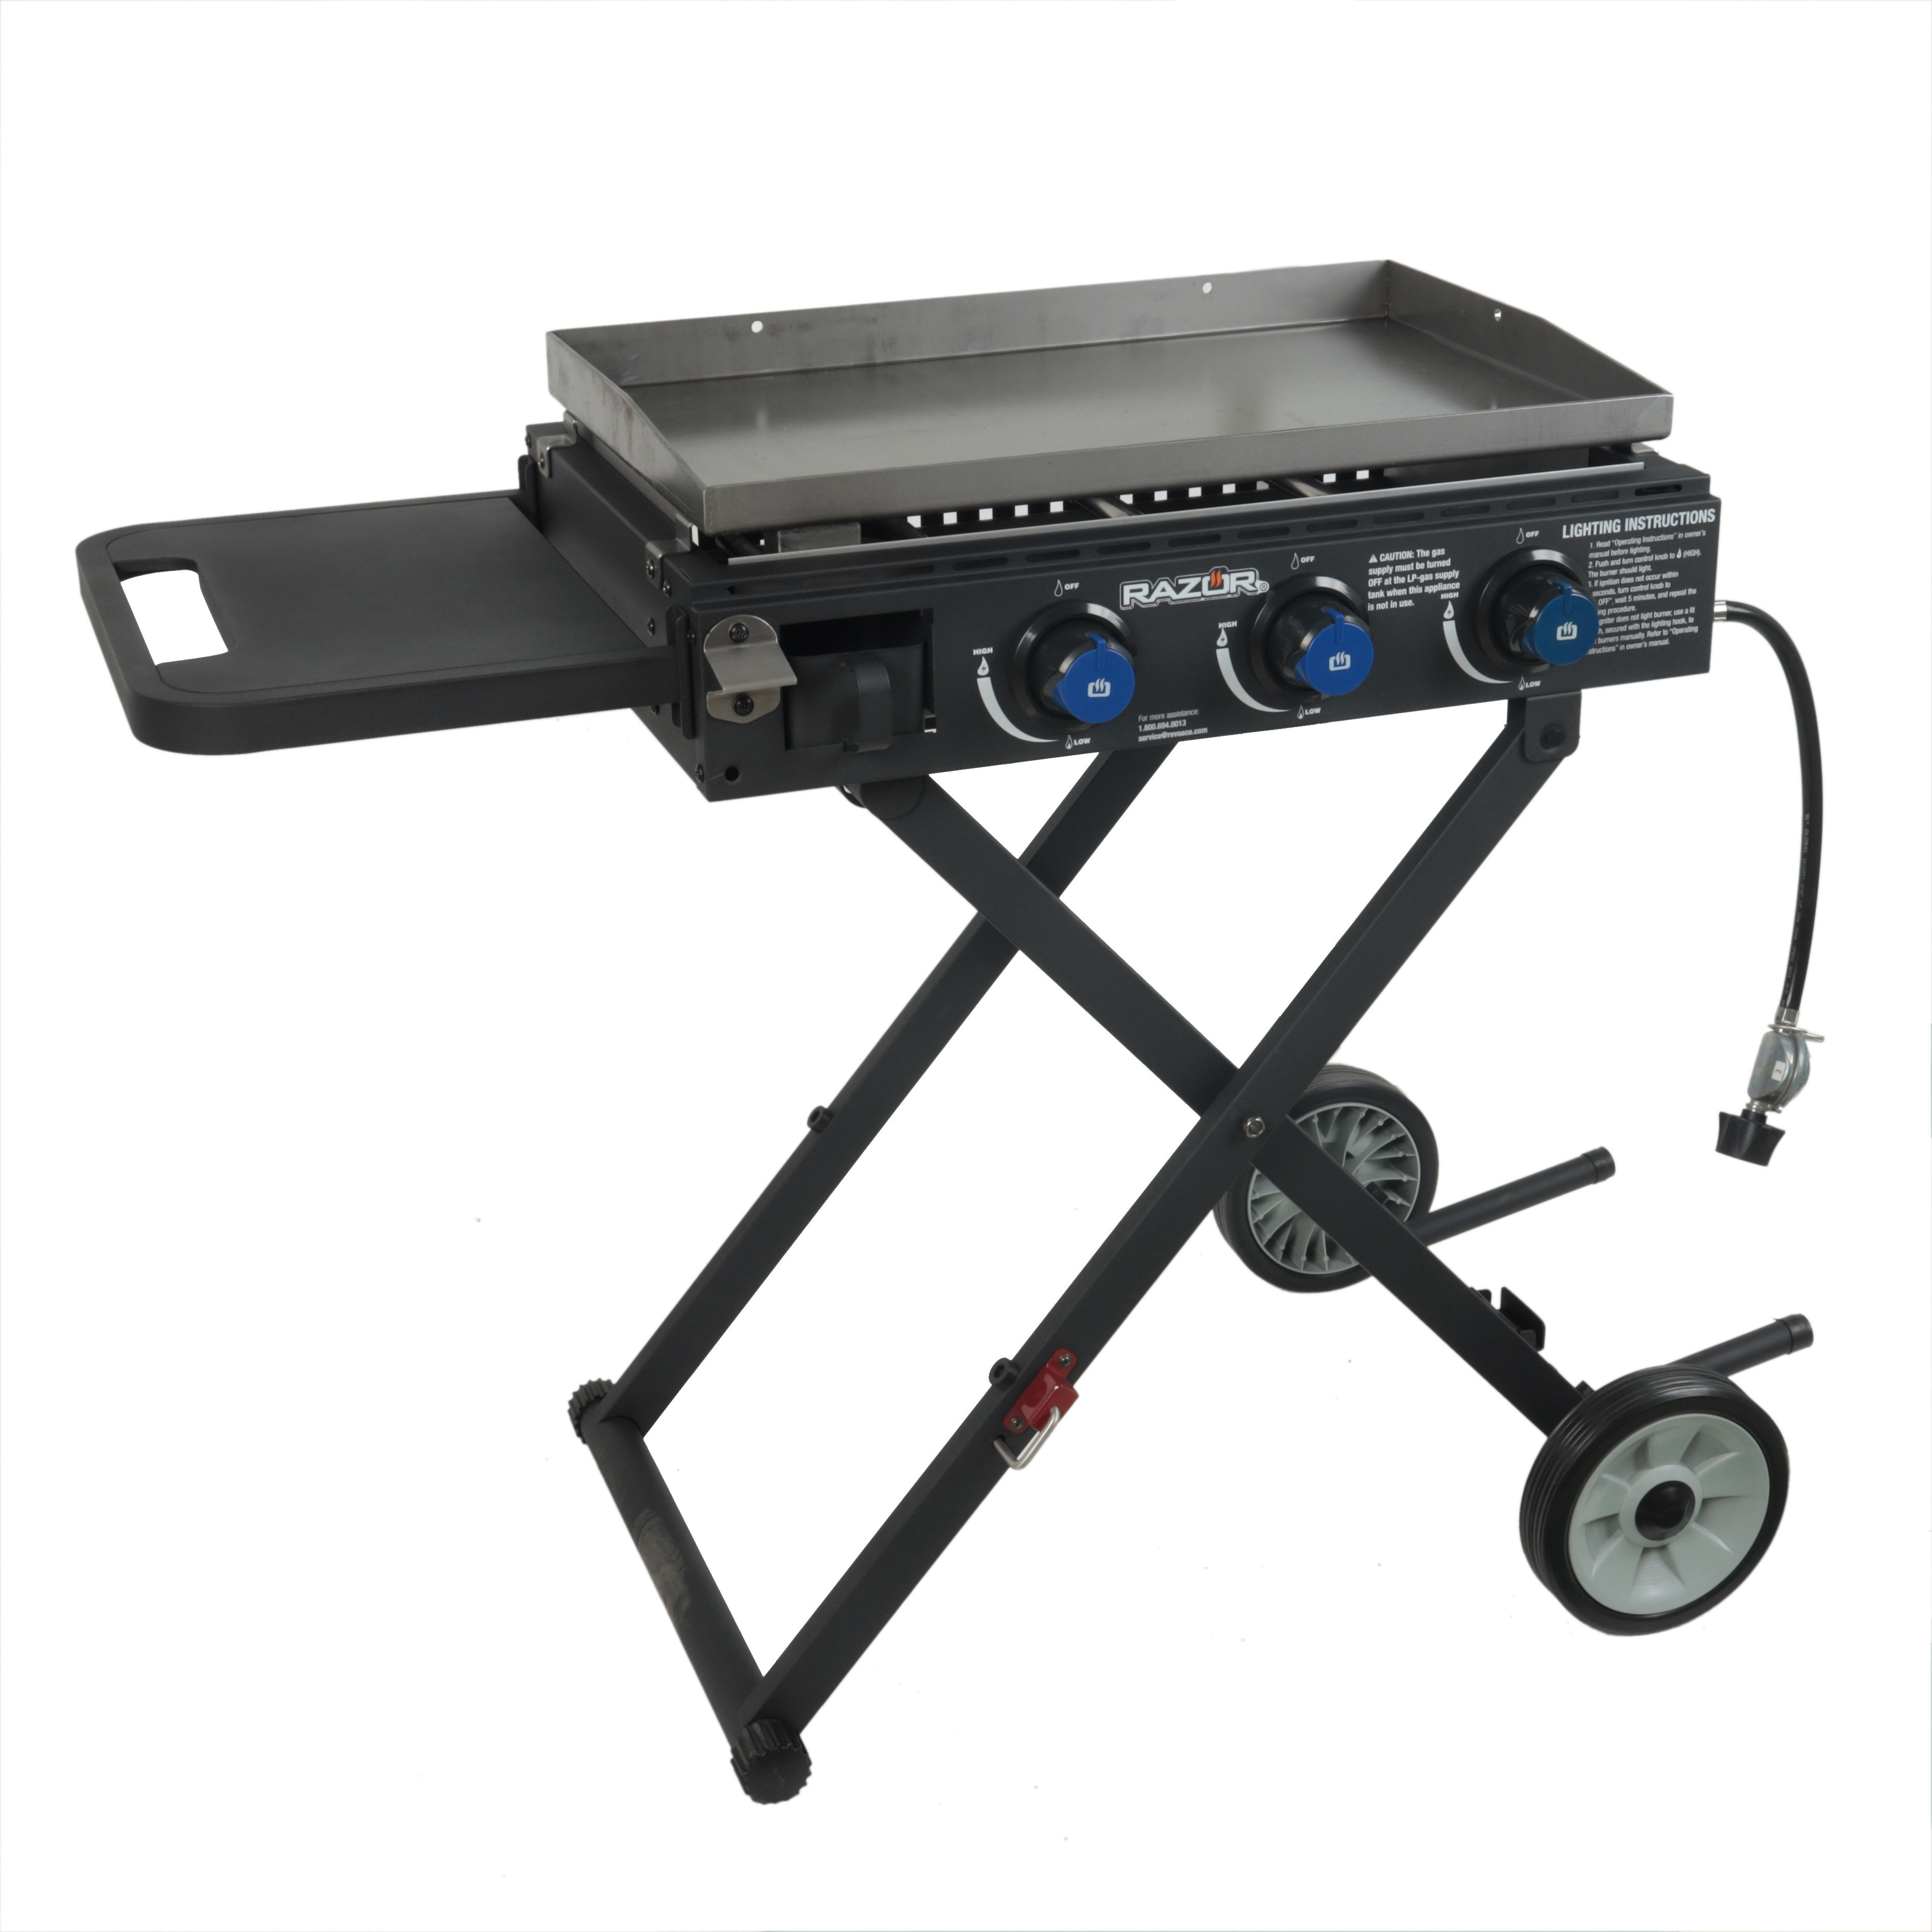 Razor 2-Burner Portable Lp Gas Griddle with Lid and Folding Cart, GGC2030M